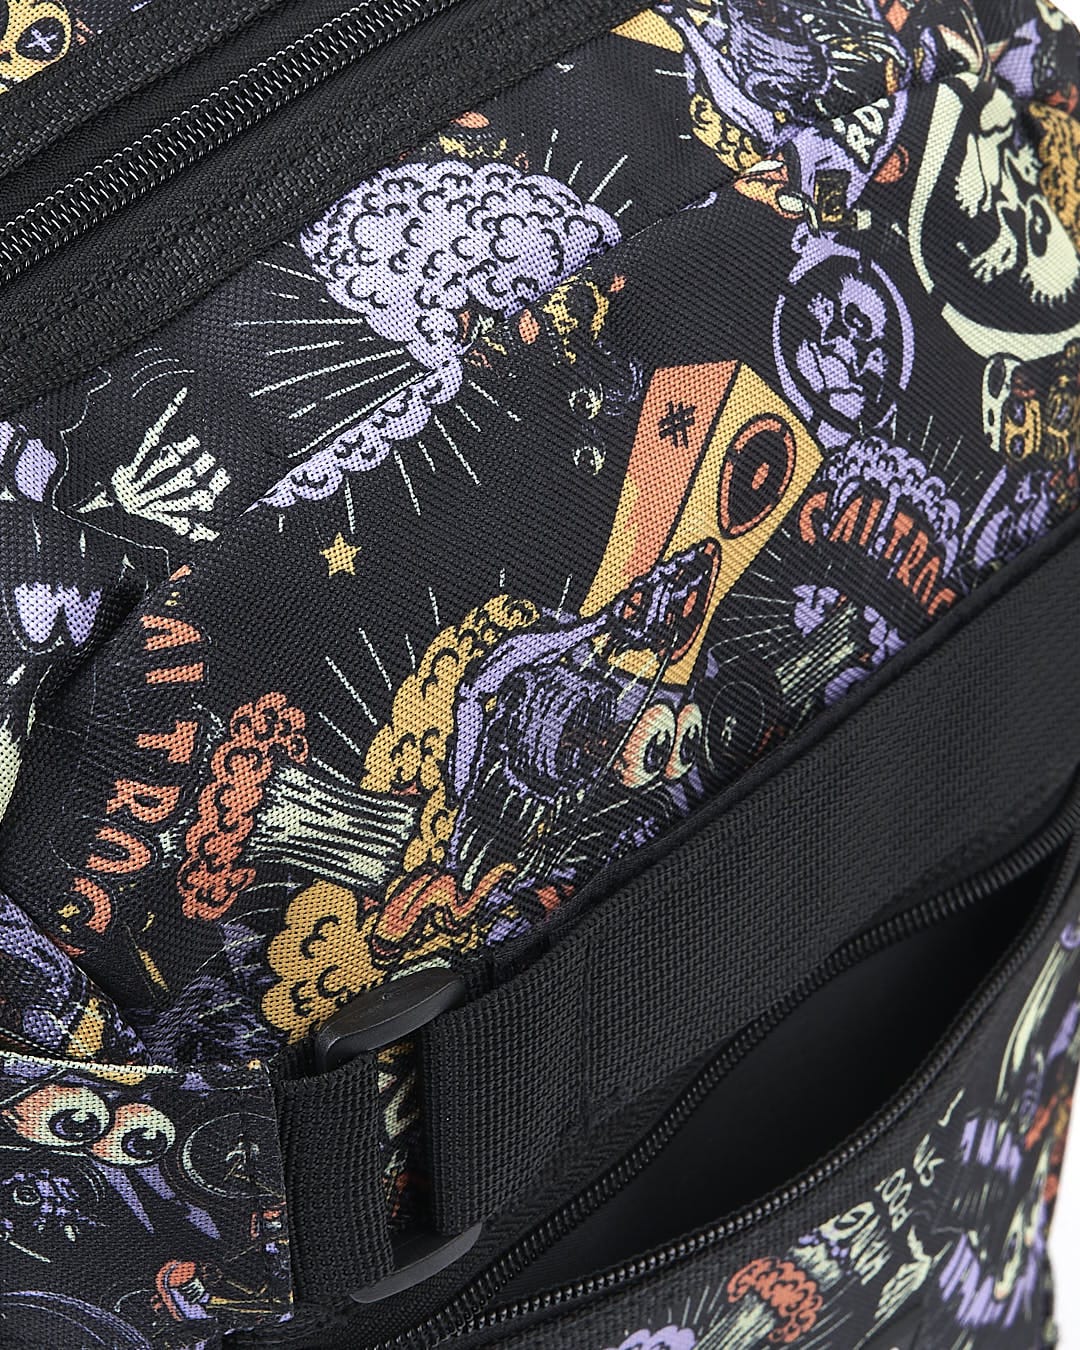 A Creeper Crew - Skatepack - Black backpack with a skull print on it. (Saltrock)